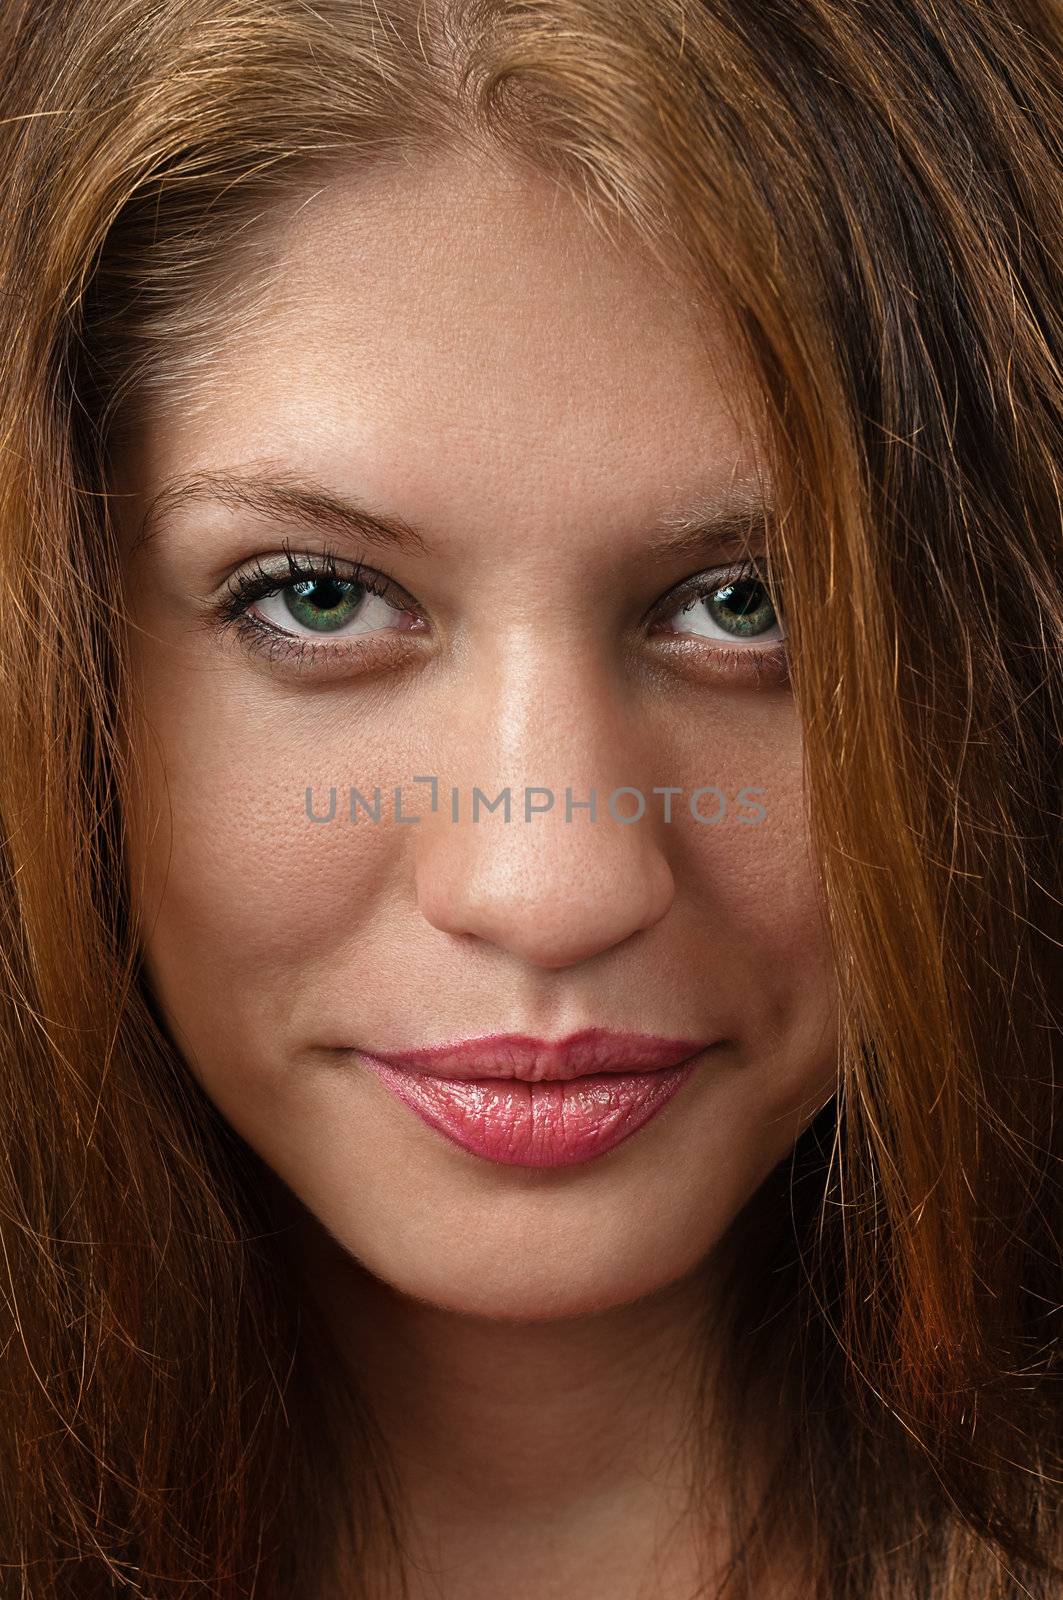 Female face detailed close up by dmitryelagin